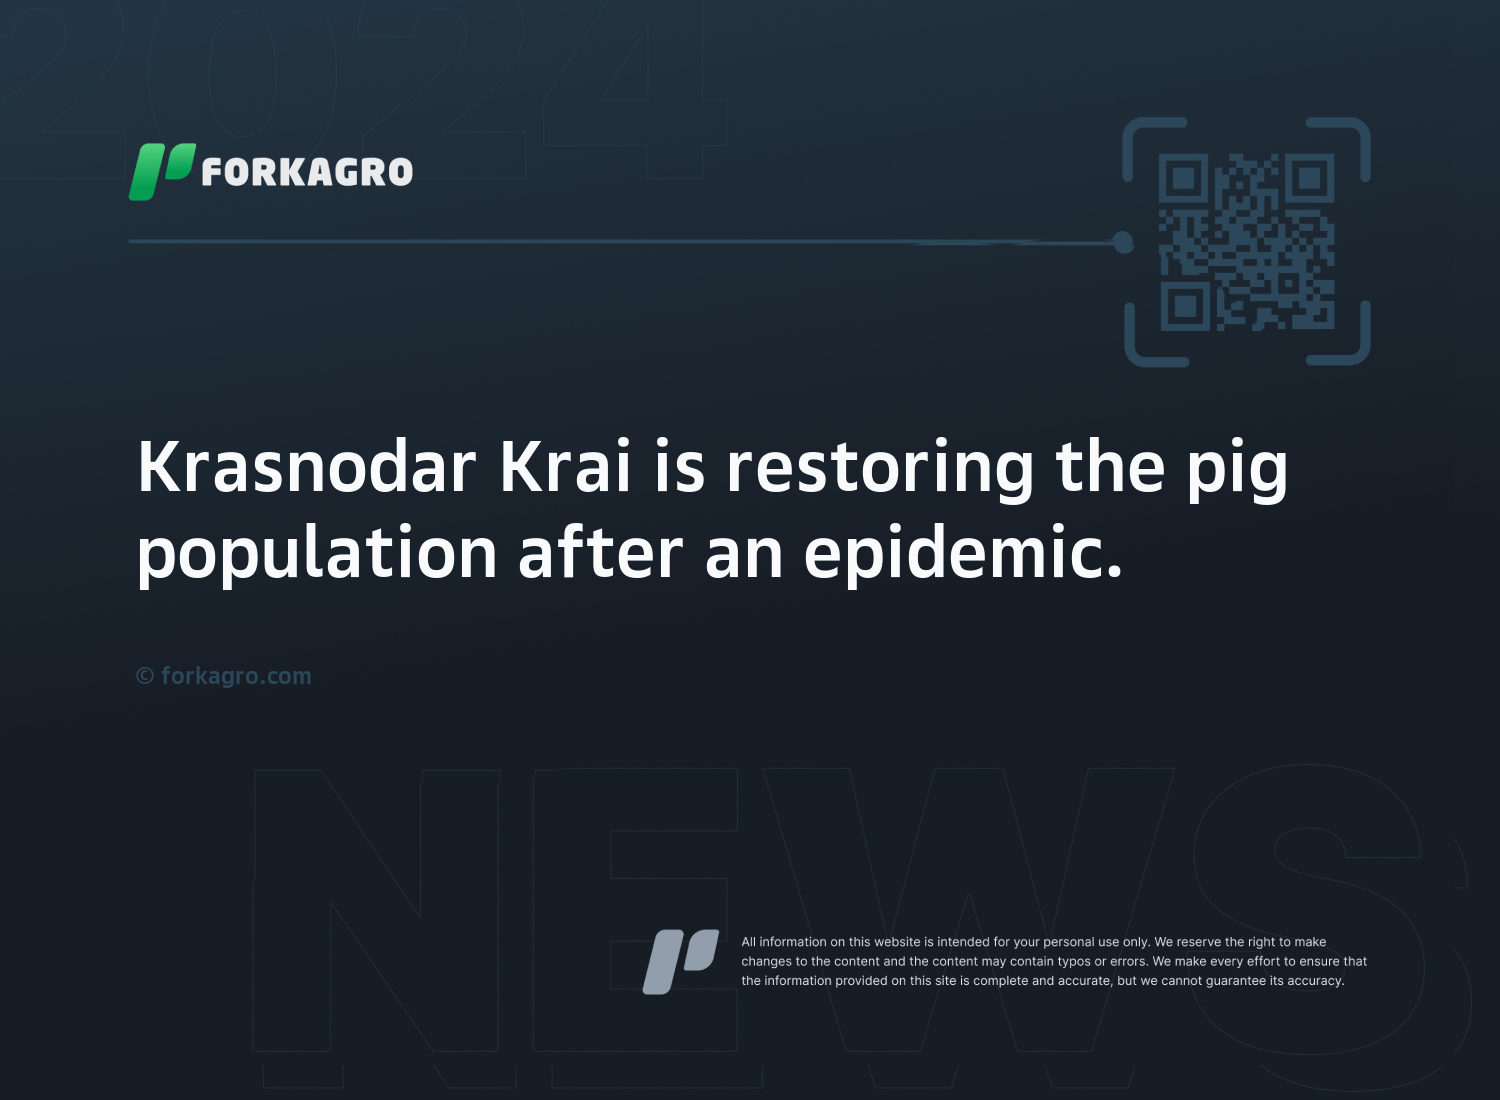 Krasnodar Krai is restoring the pig population after an epidemic.